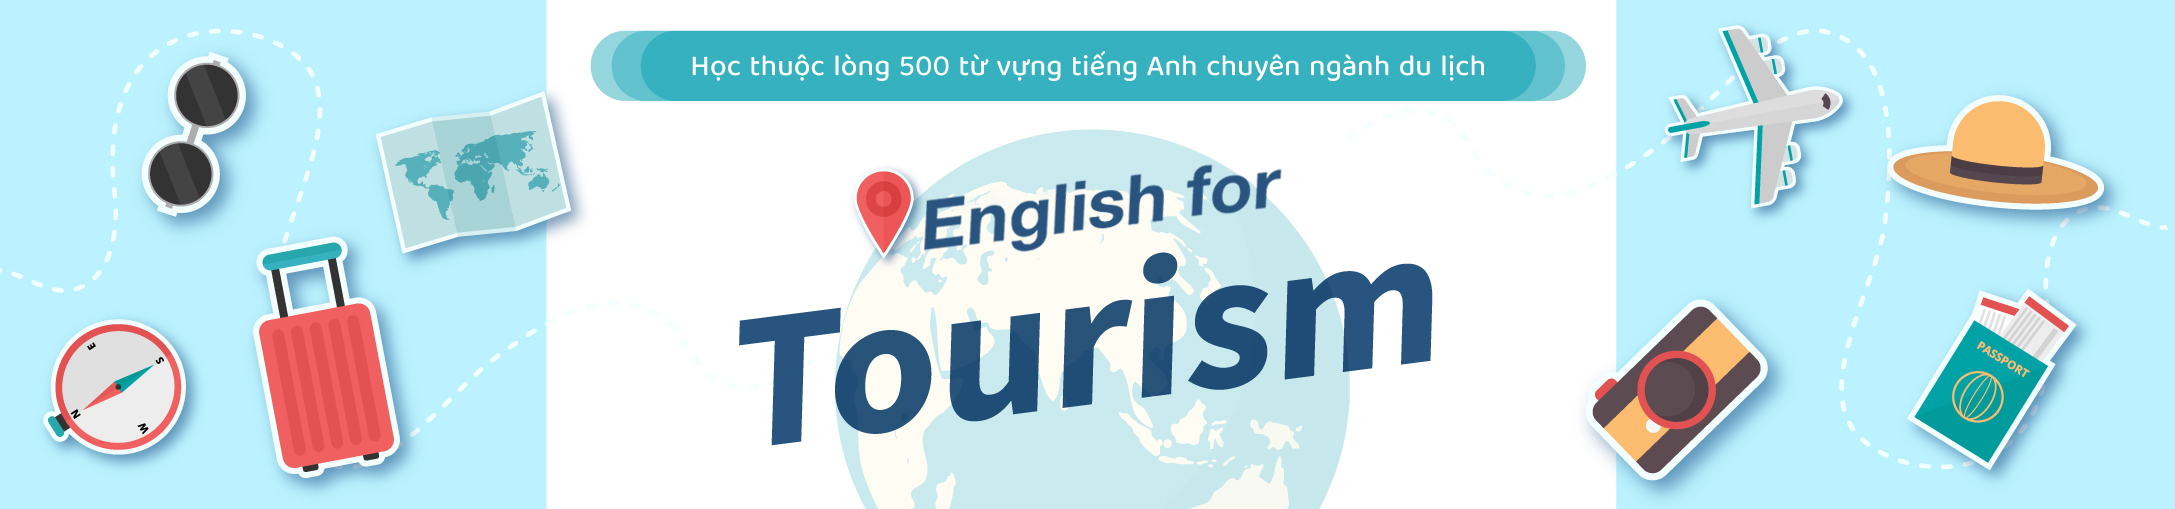 ENGLISH FOR TOURISM